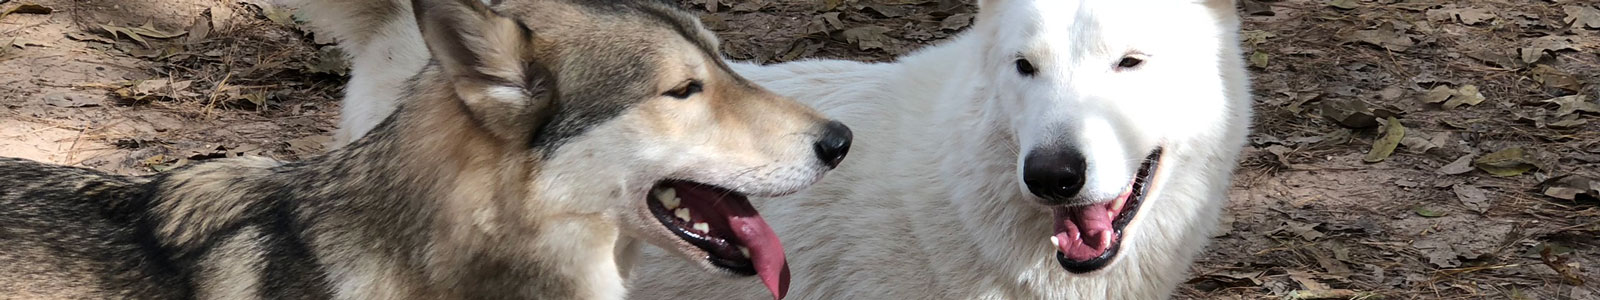 Texas Wolfdog Project Loving Tributes Header Image